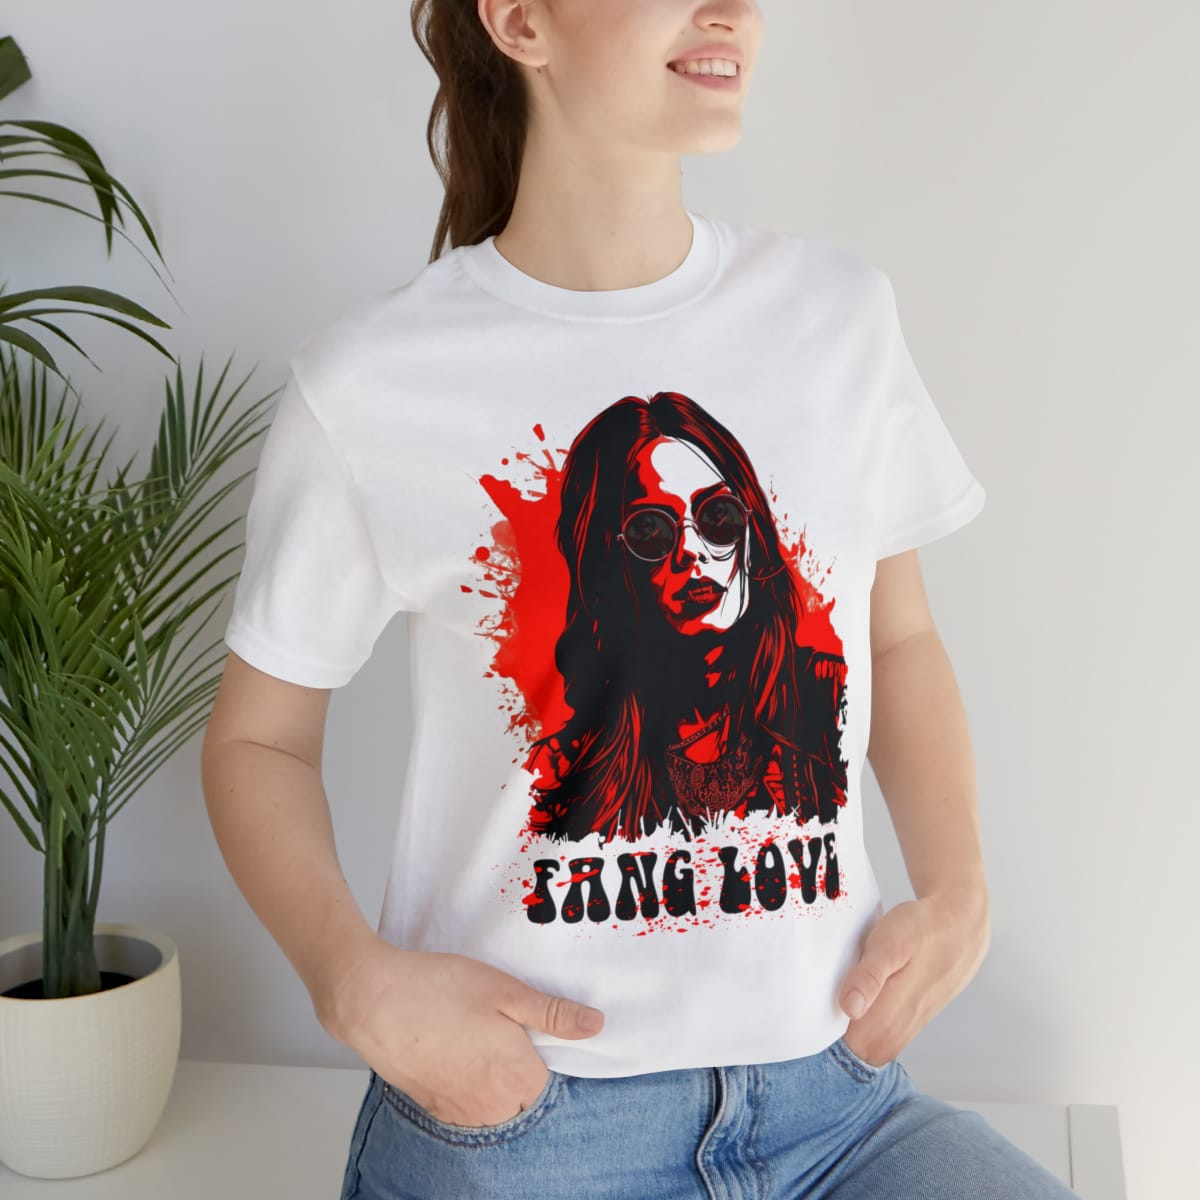 Fang Love - Hippie Vampie - Unisex Short Sleeve Tee Shirt - Walrus Carp